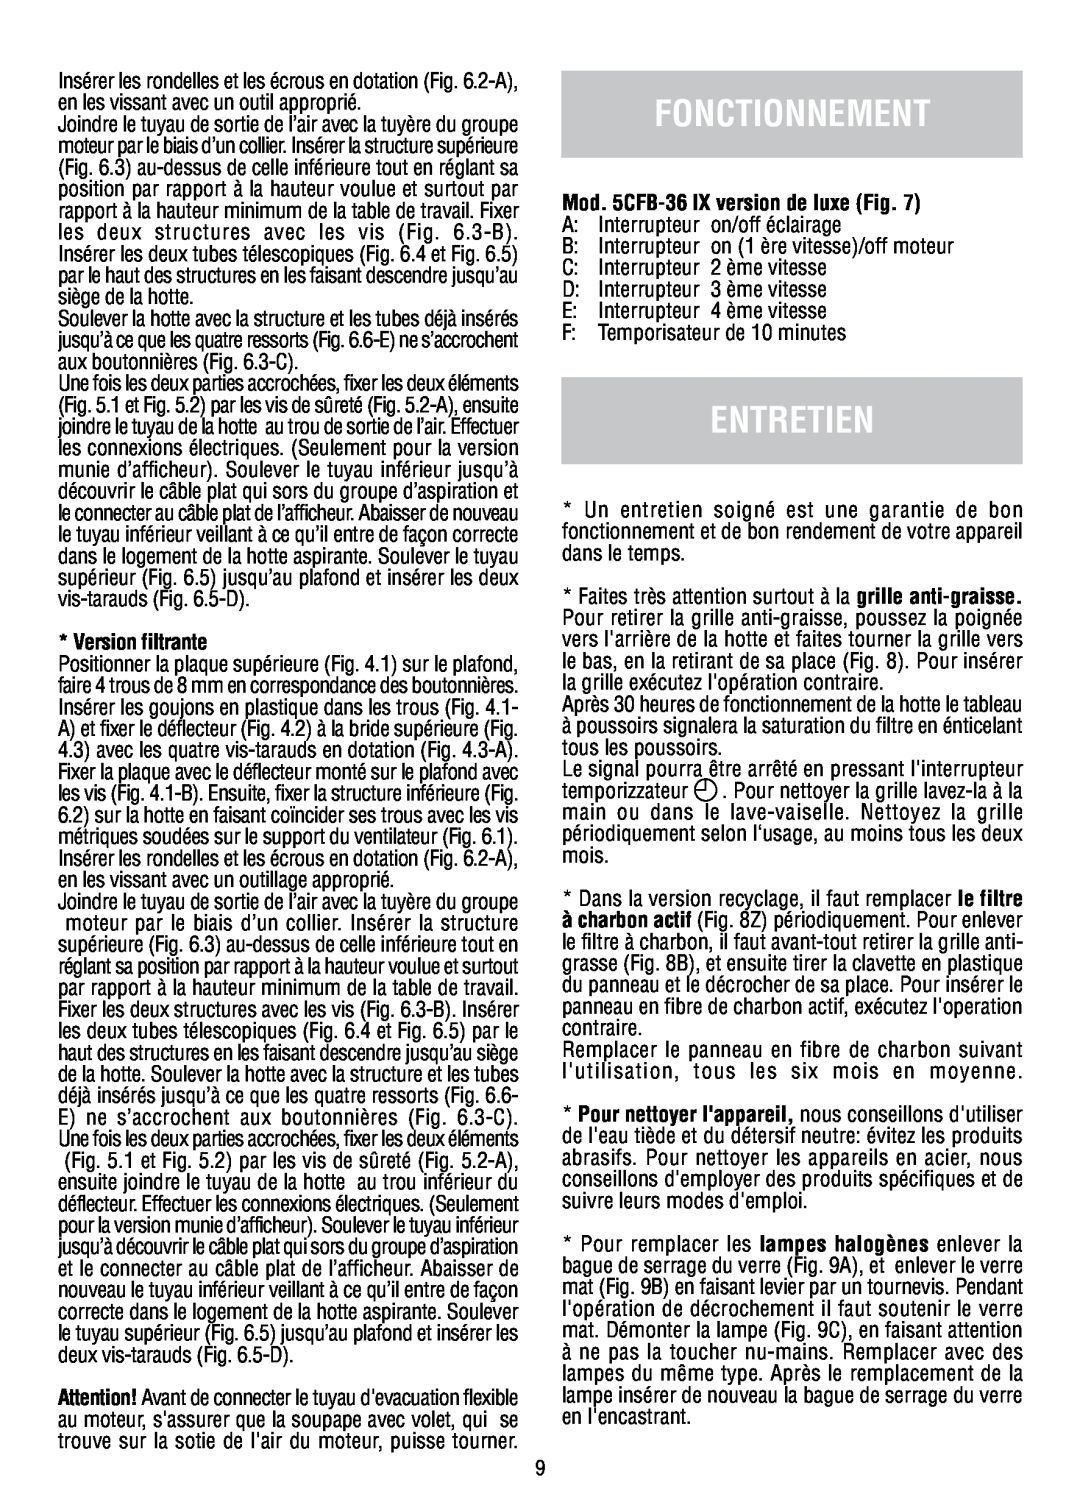 Fagor America SCFB-36 IX manual Fonctionnement, Entretien, Version filtrante, Mod. 5CFB-36 IX version de luxe Fig 